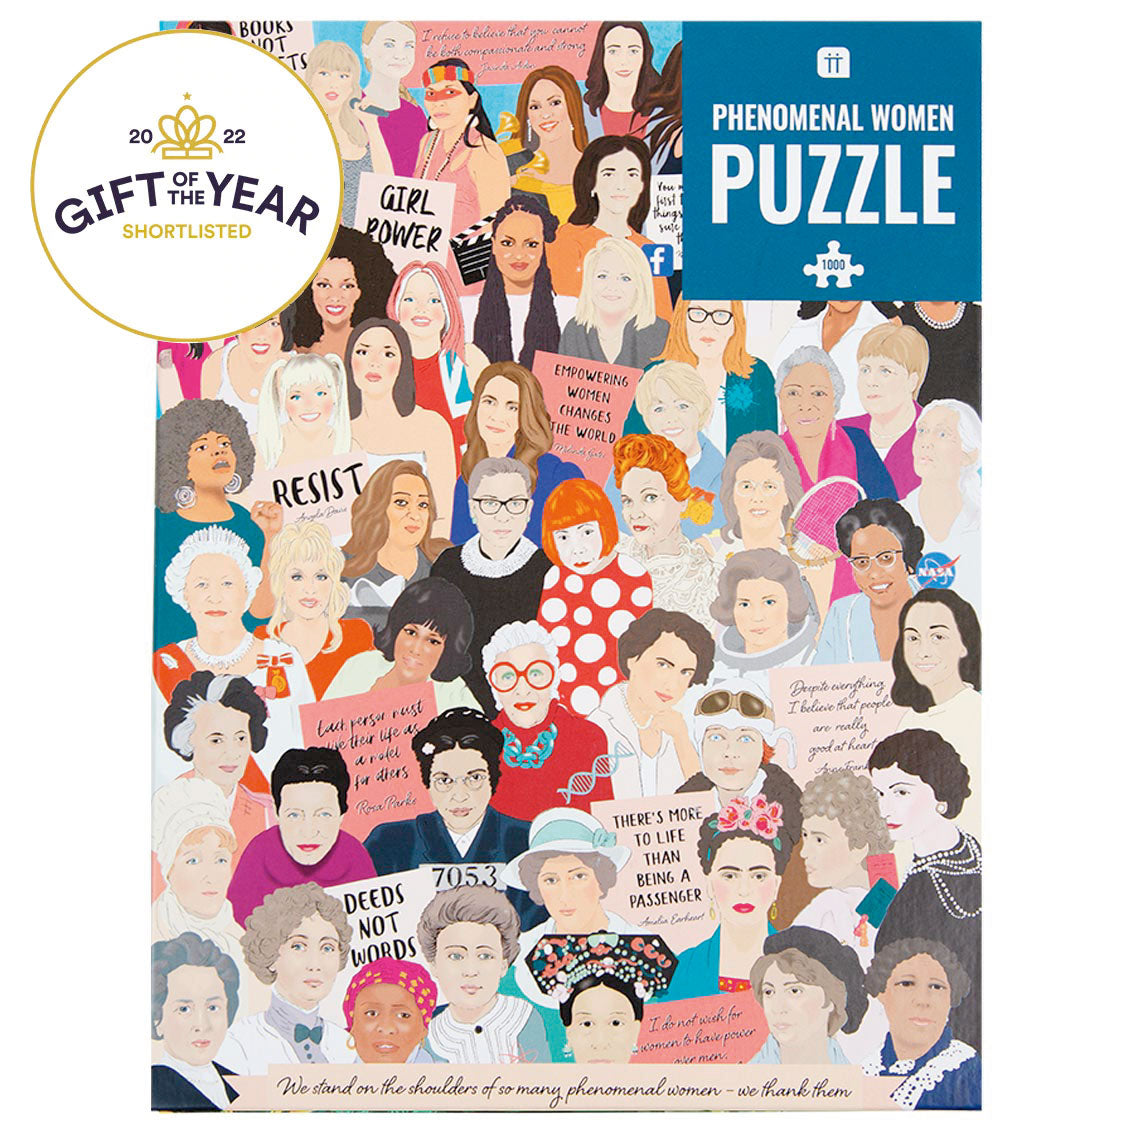 Cadeau puzzel phenomenal women puzzle fenomenale vrouwen puzzel